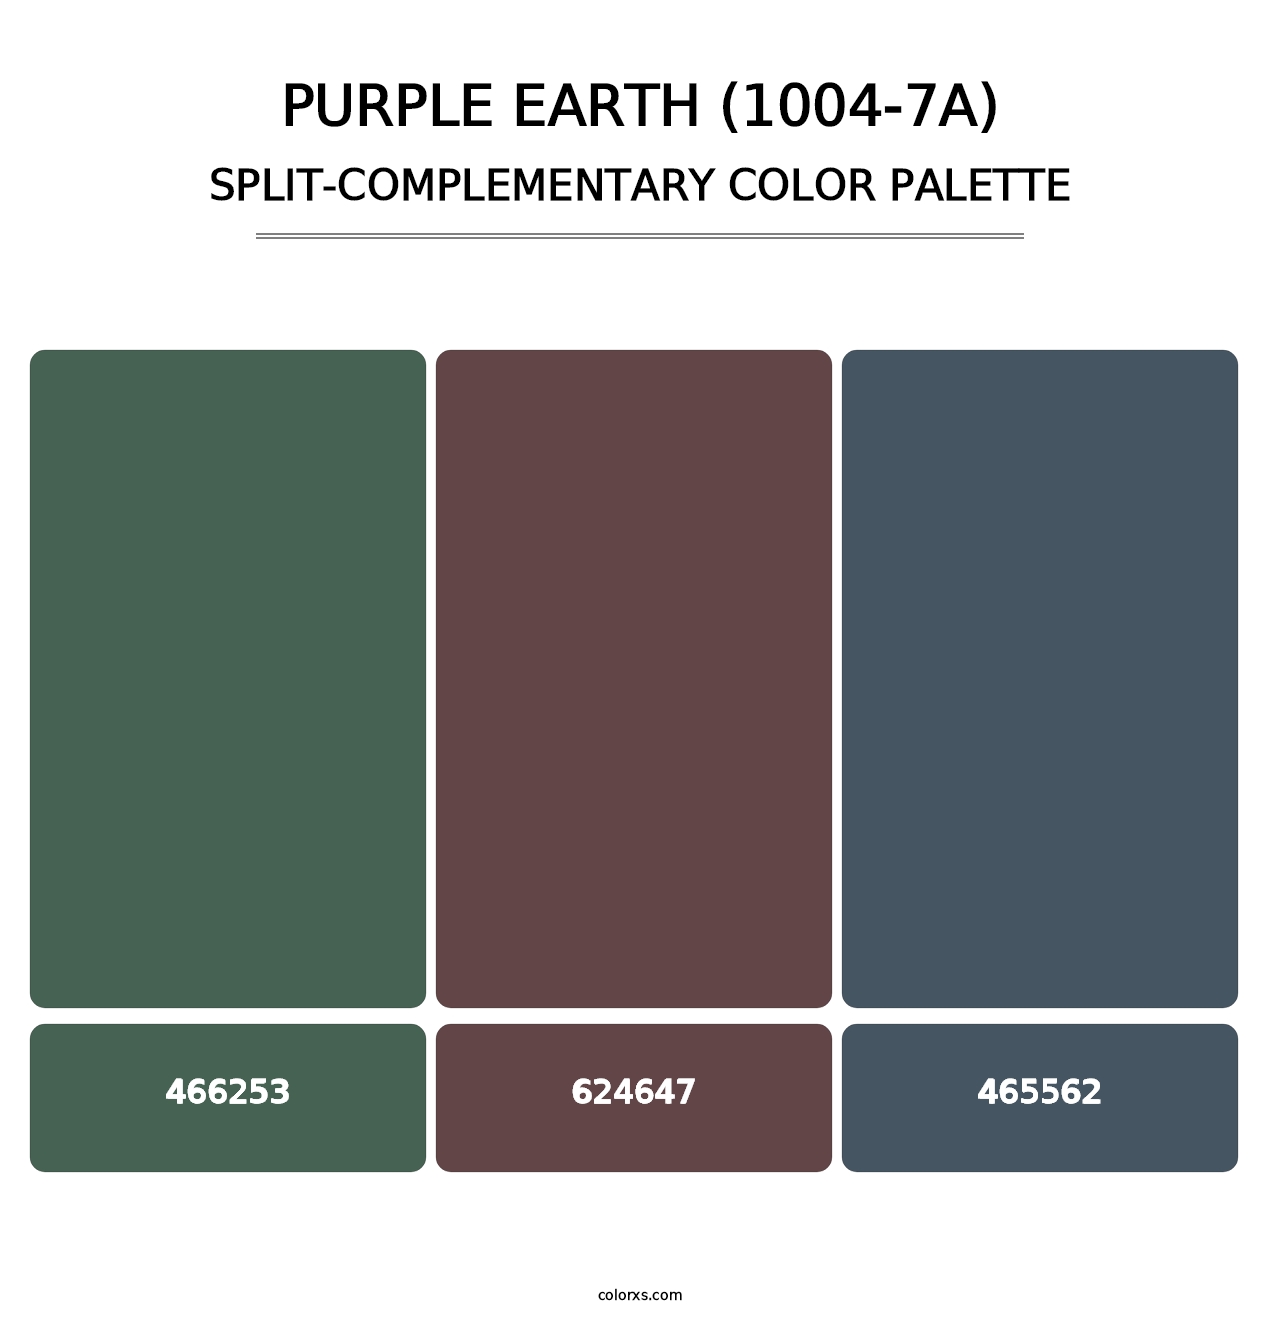 Purple Earth (1004-7A) - Split-Complementary Color Palette